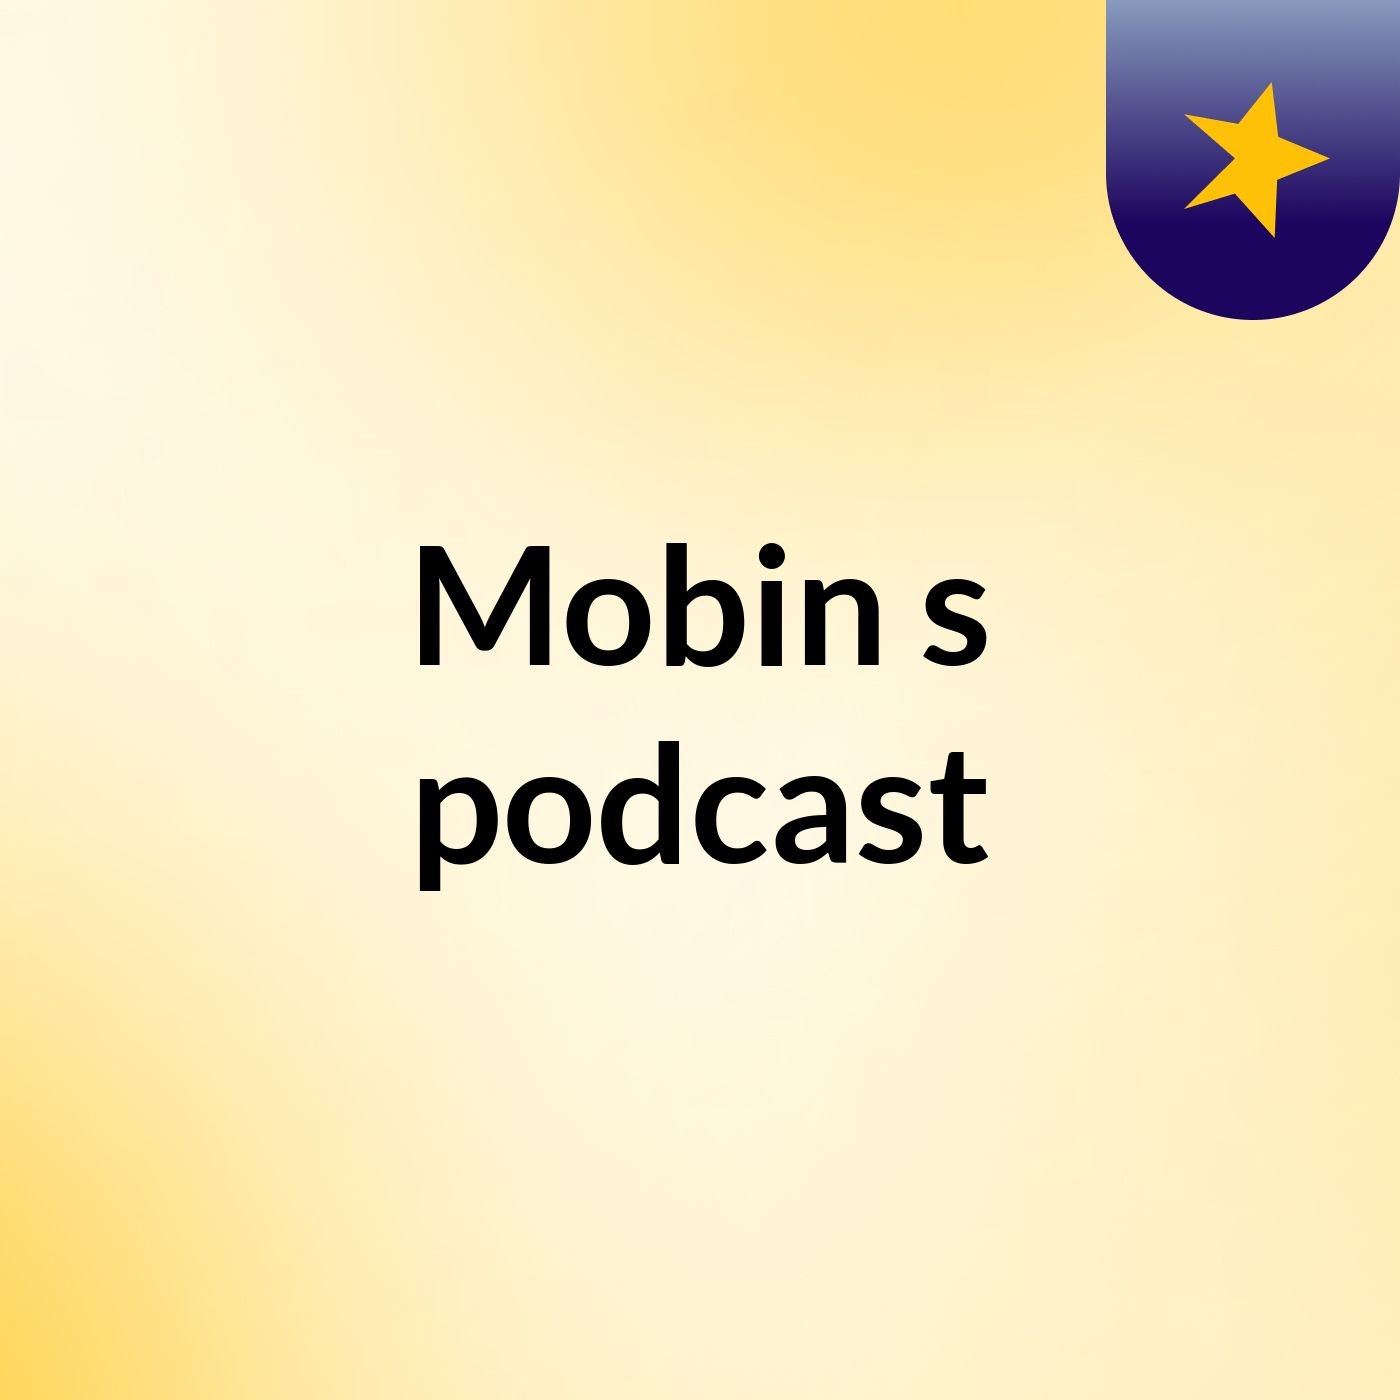 Episode 5 - Mobin's podcast